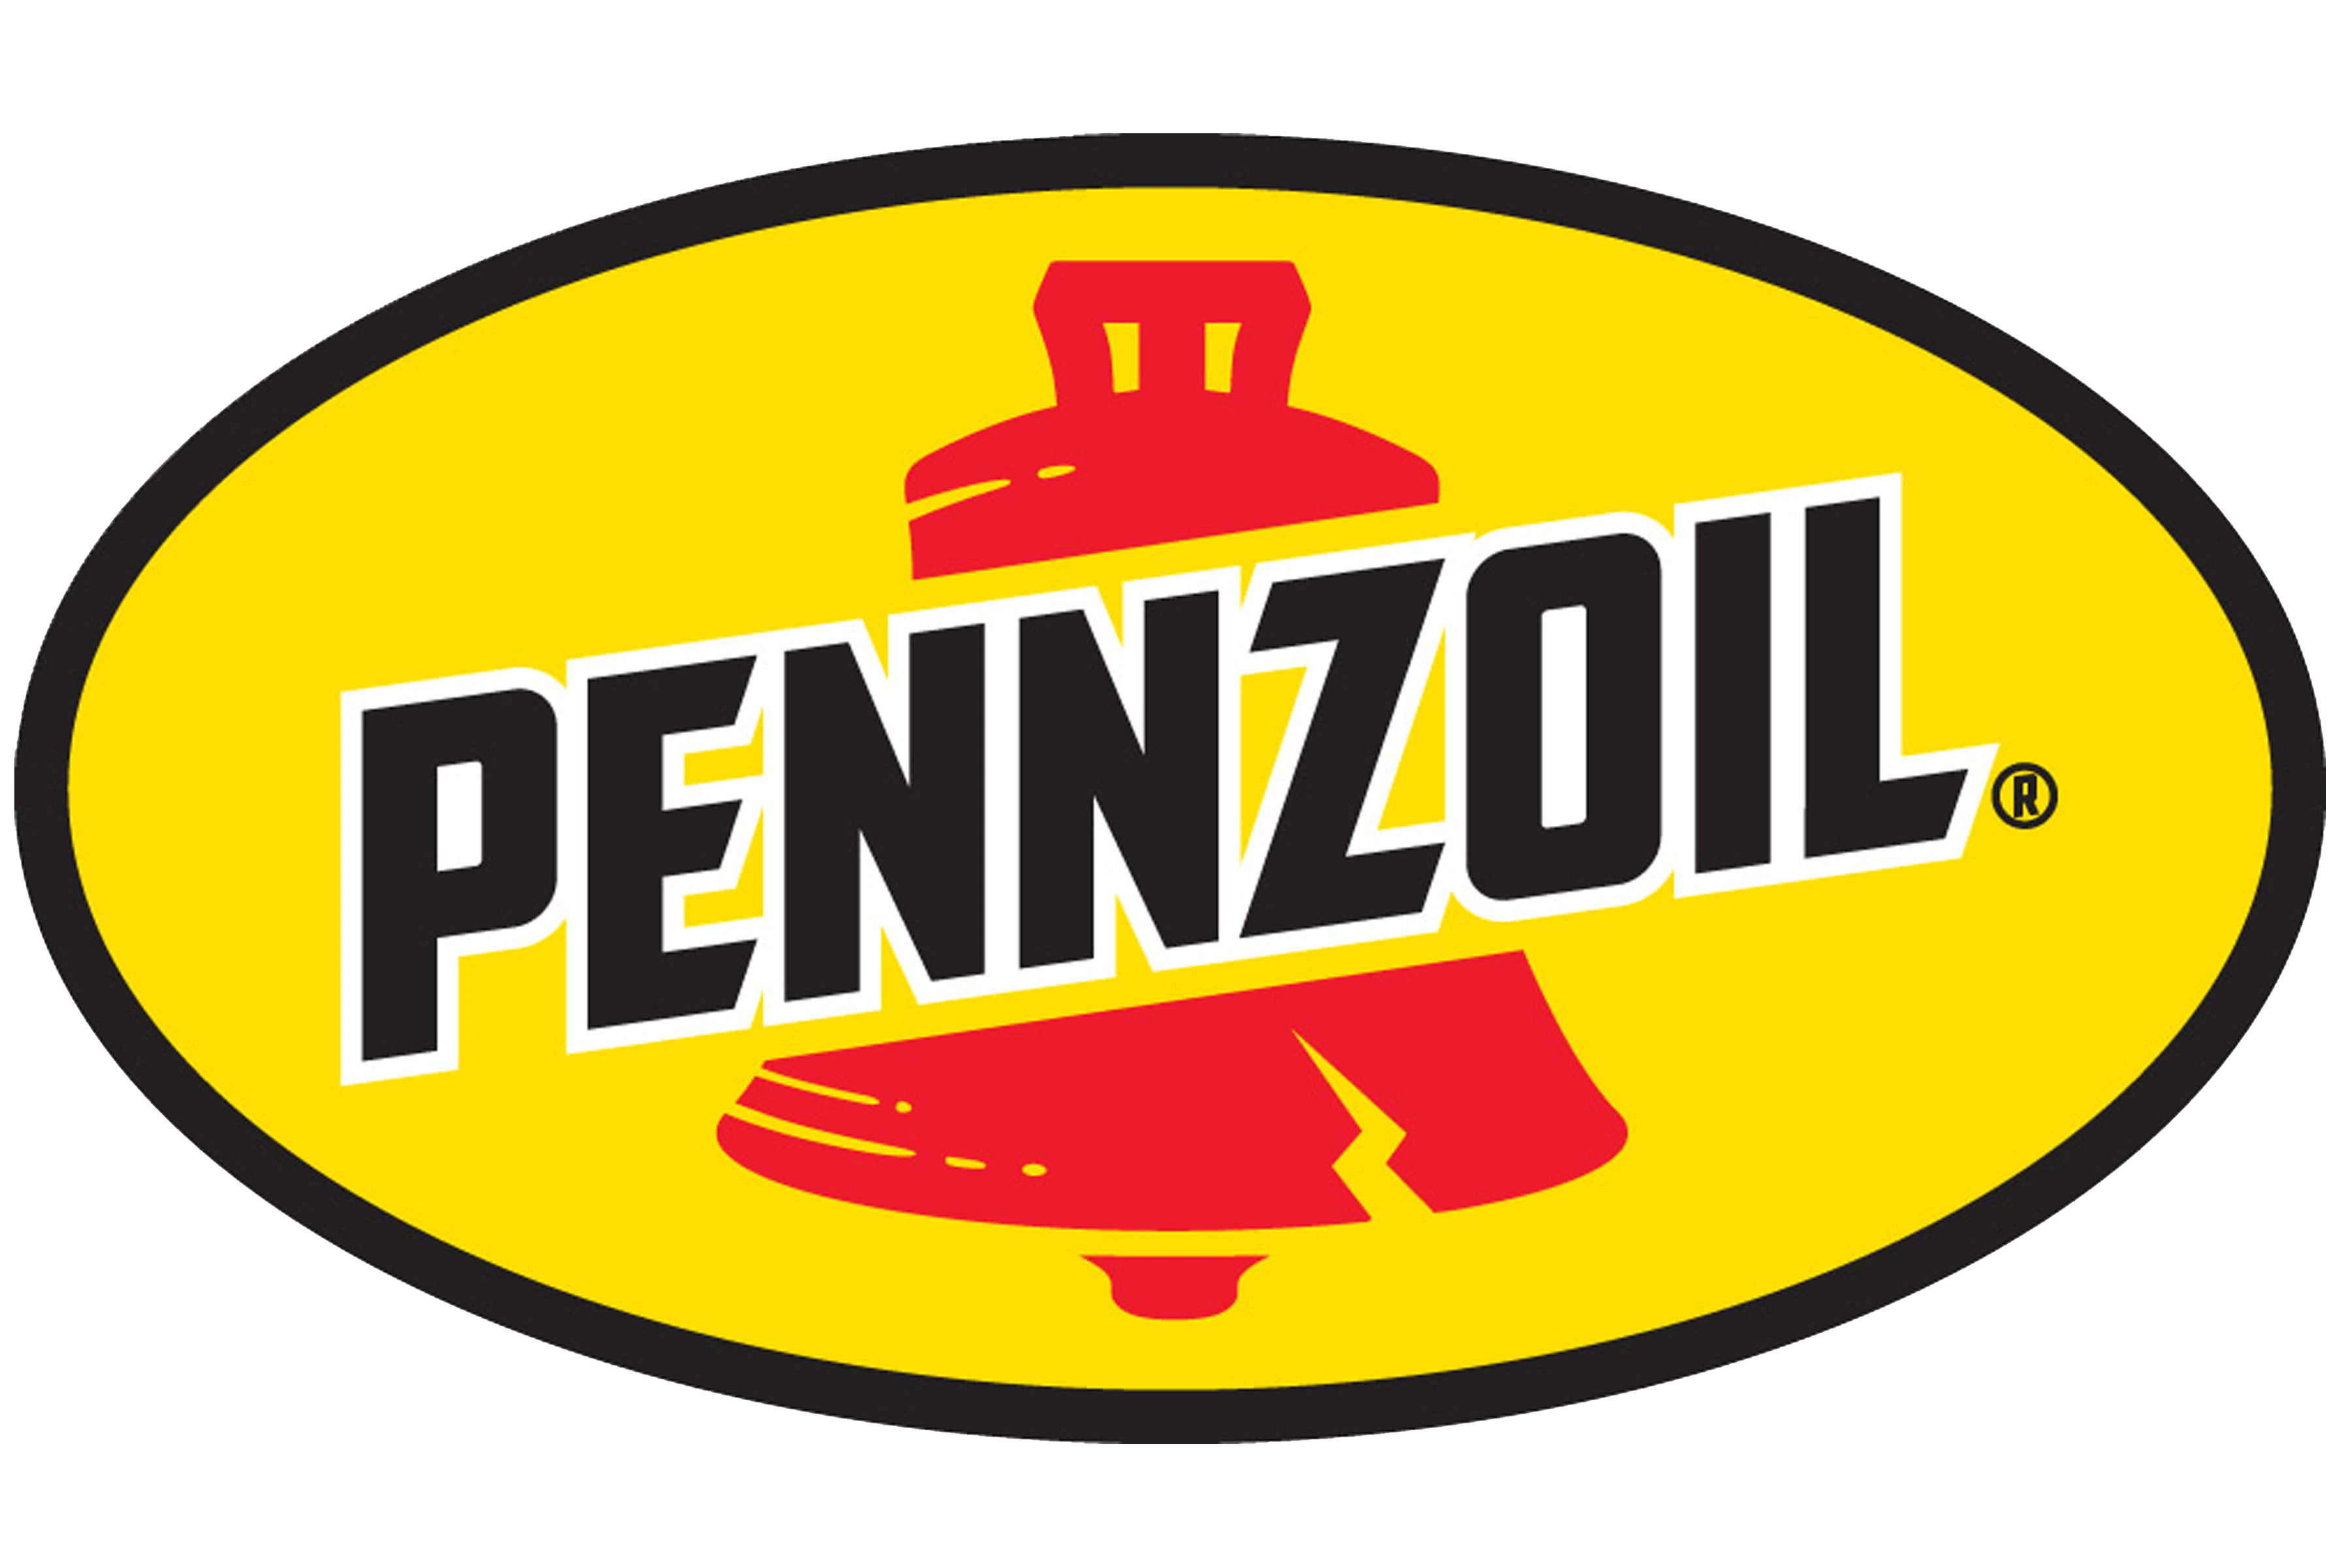 Pennzoil